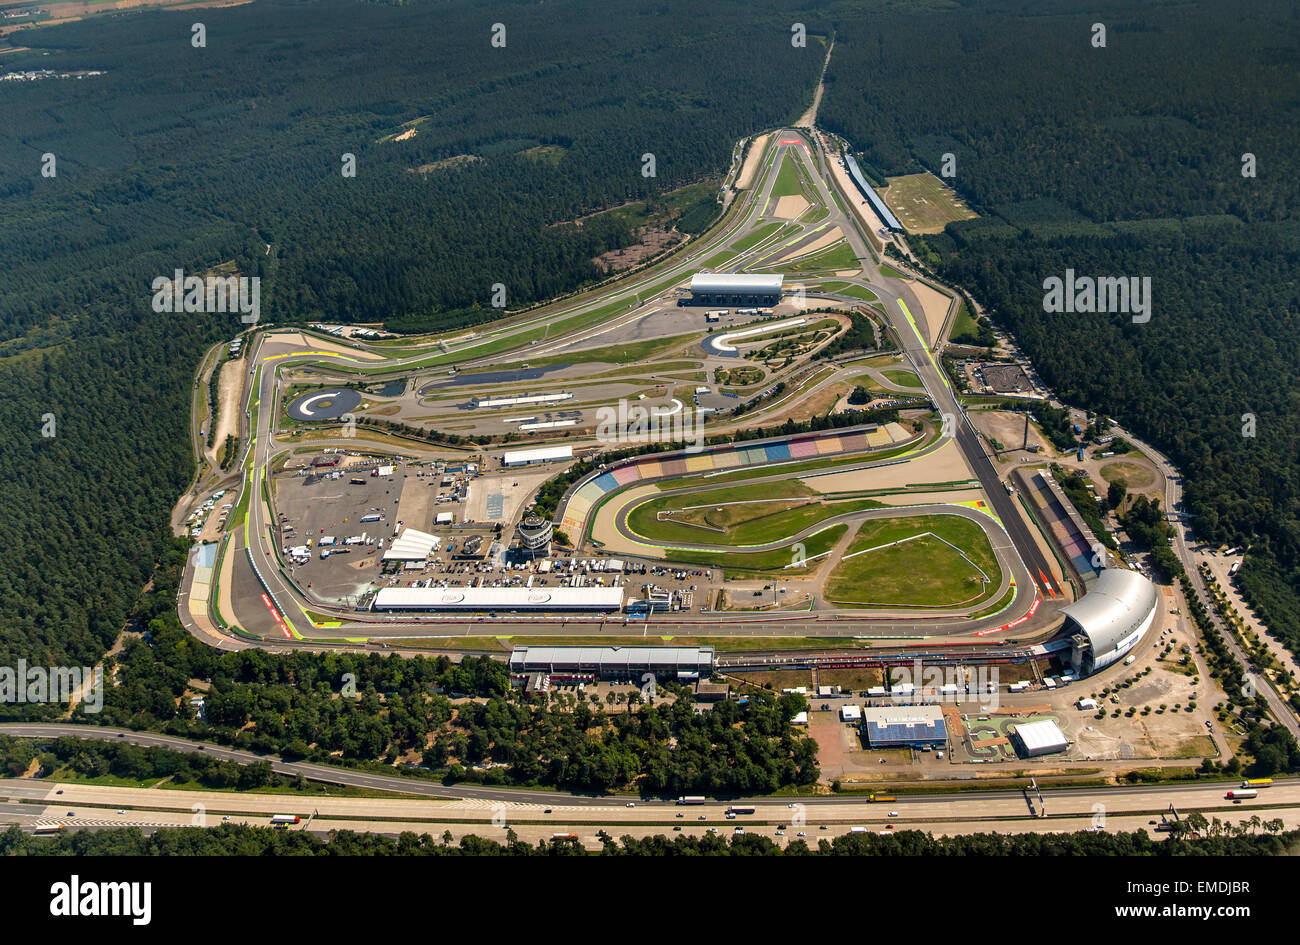 Hockenheimring, DTM motor racing circuit, Hockenheim, Baden-Württemberg, Germany Stock Photo